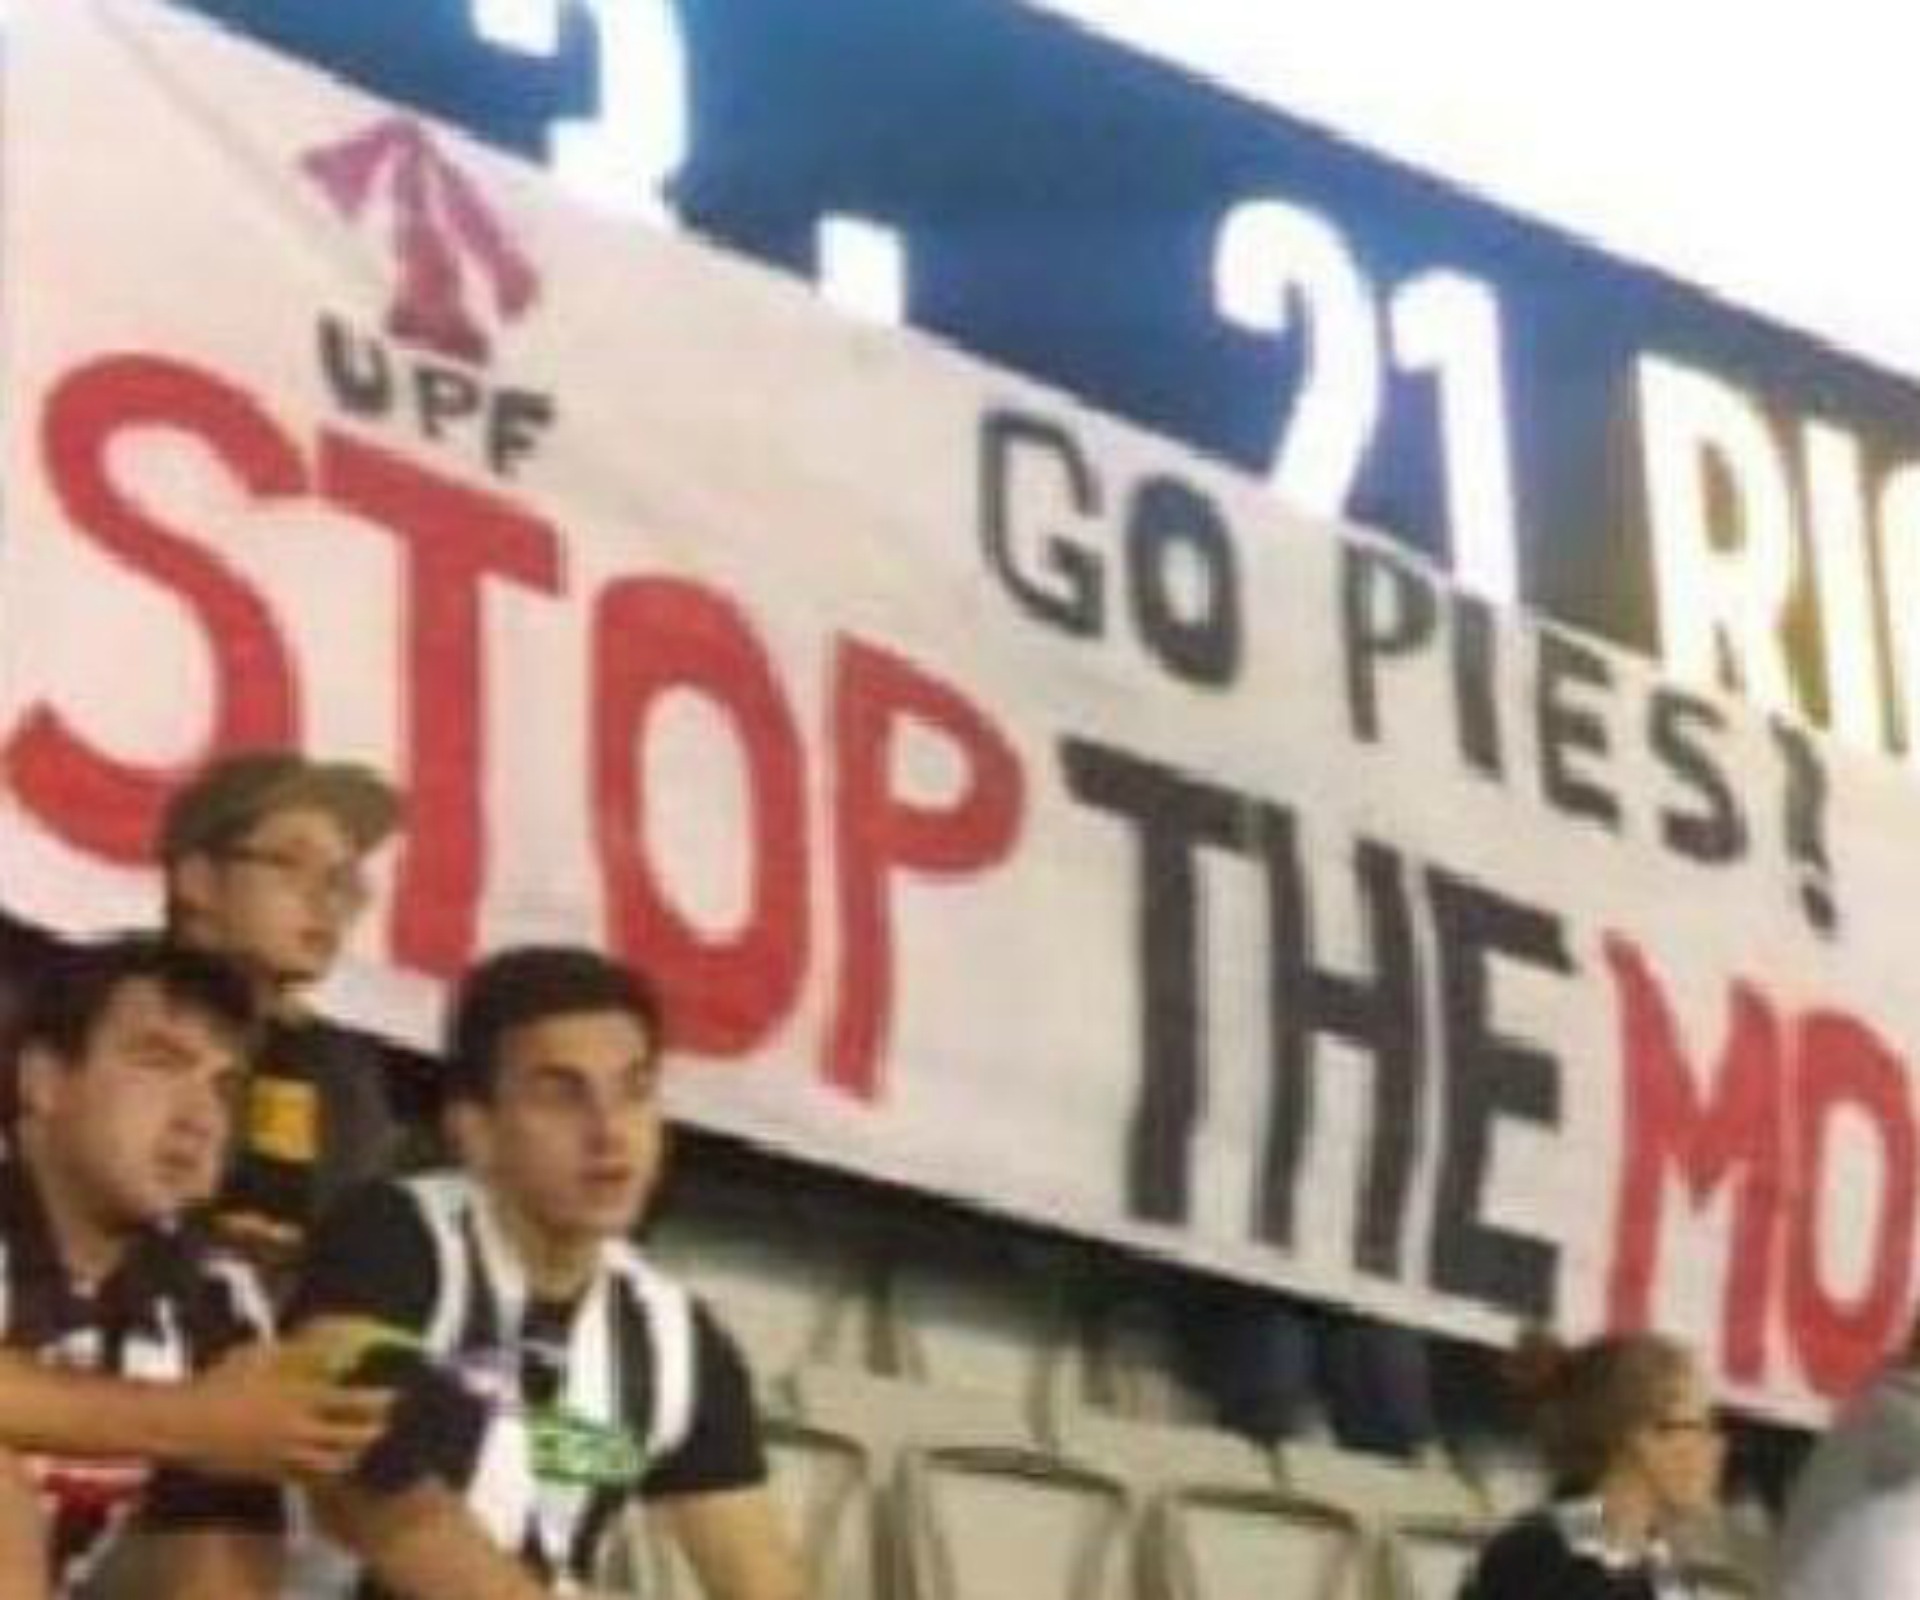 Julie Bishop: anti-Muslim banner at AFL ‘deeply unfortunate’